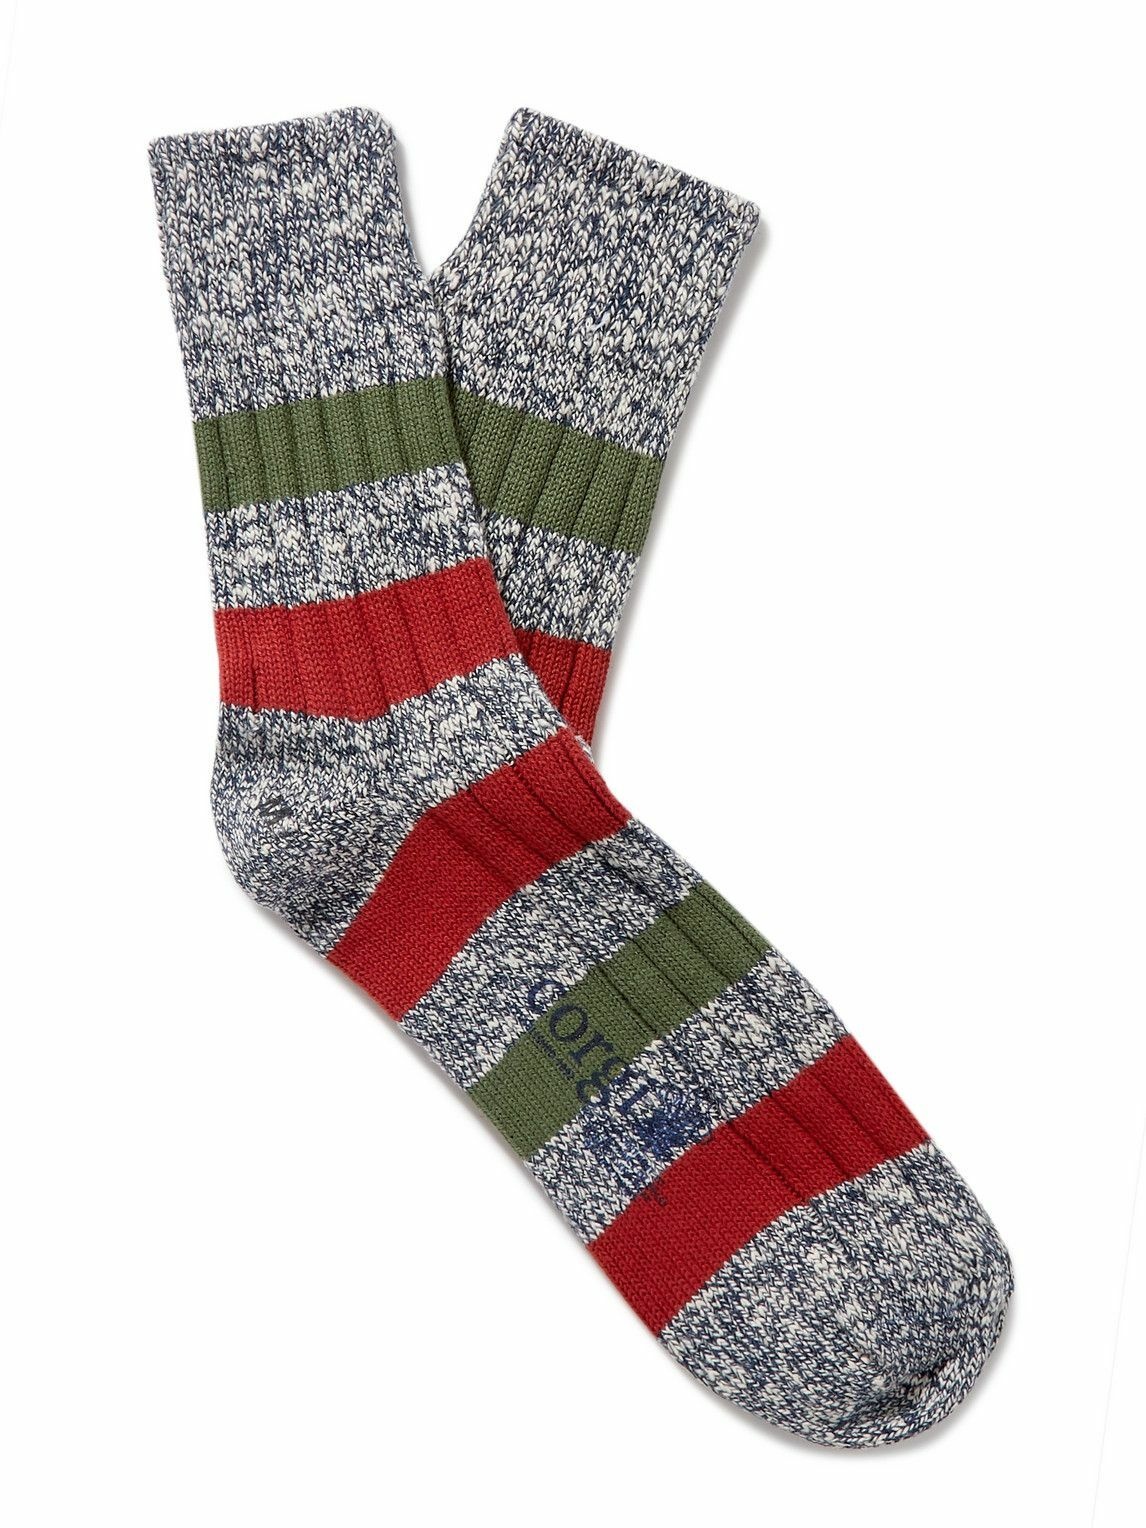 Corgi Blue Merino Wool Socks With White Fair Isle Pattern - The Noble Dandy